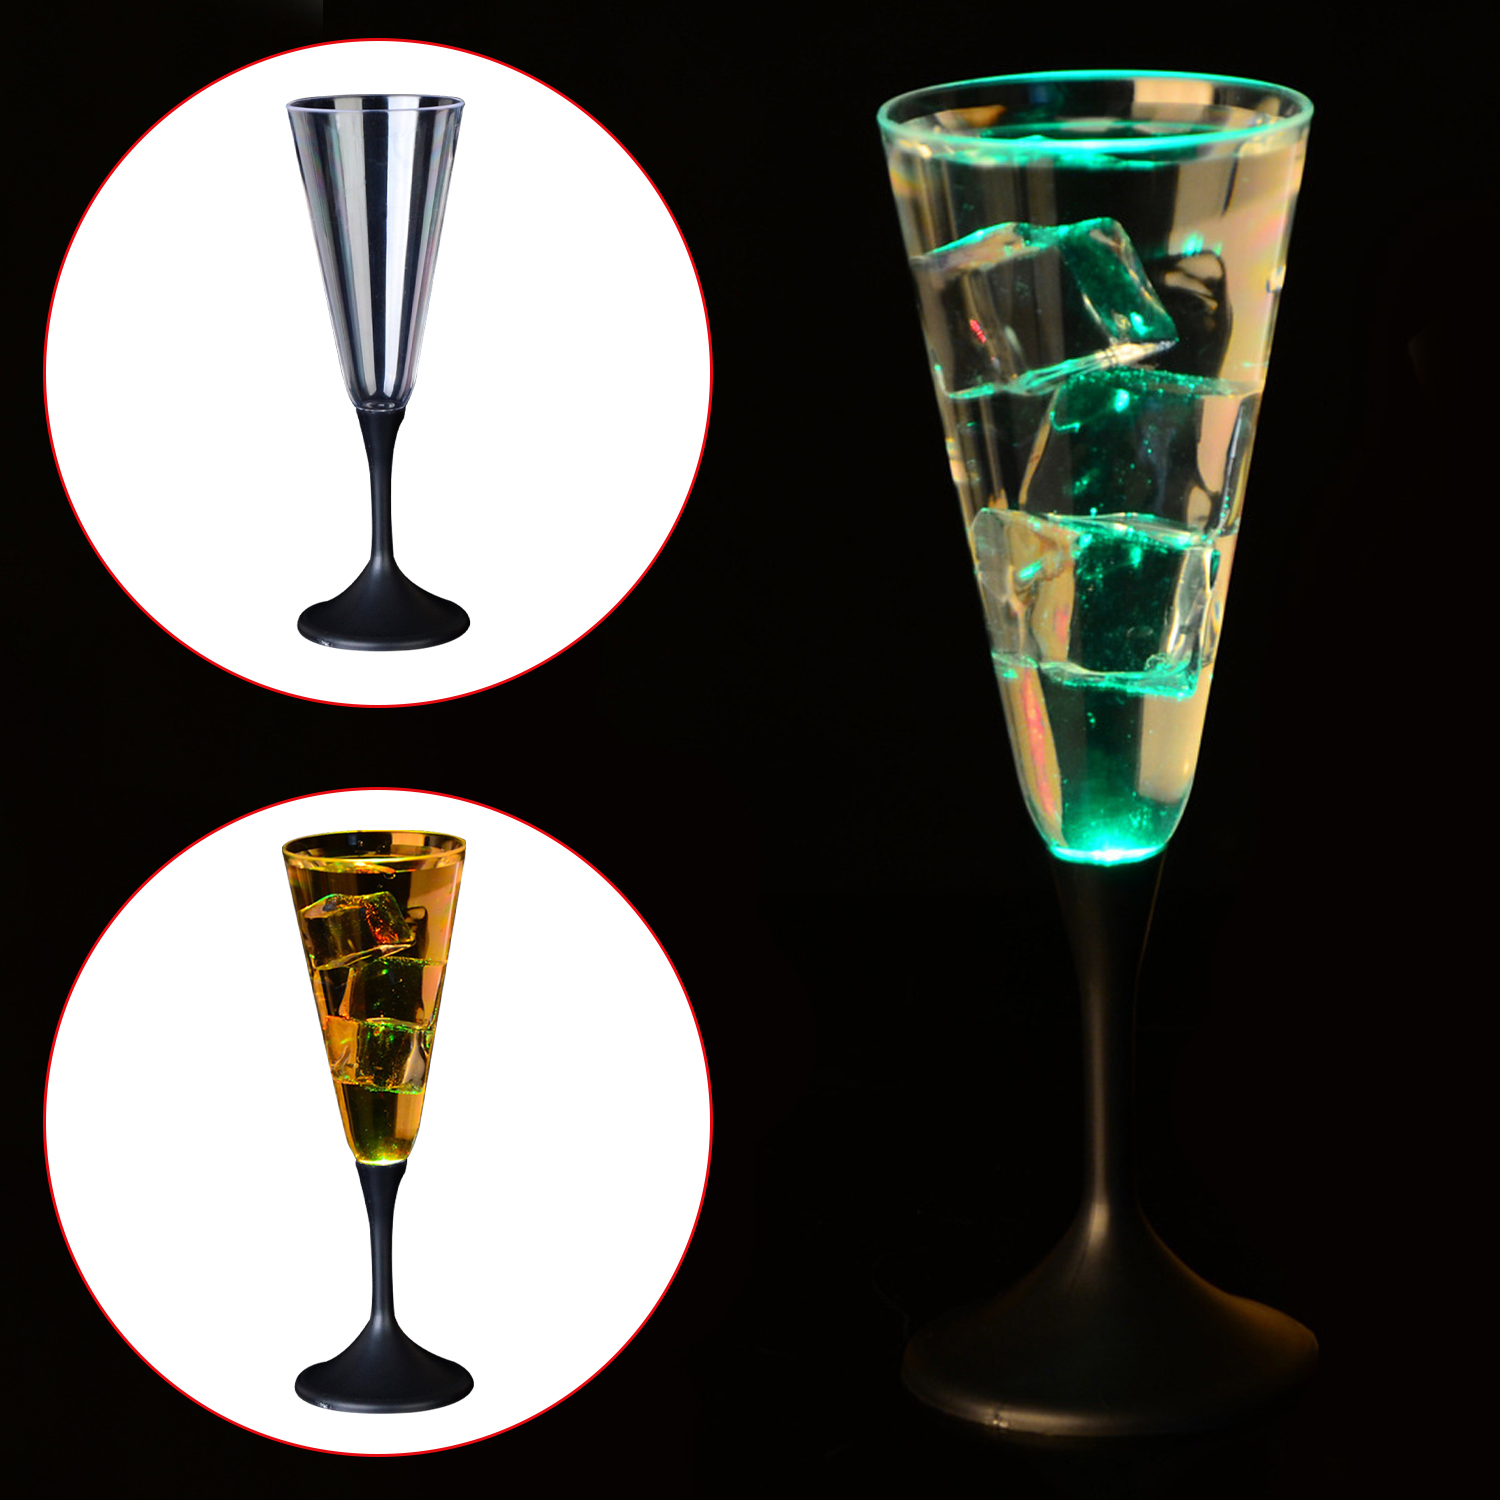 Copa de champán Copa de champán intermitente Iluminar copas de flauta de champán Copa de champán LED Fiesta de celebración o barra con líquido activado